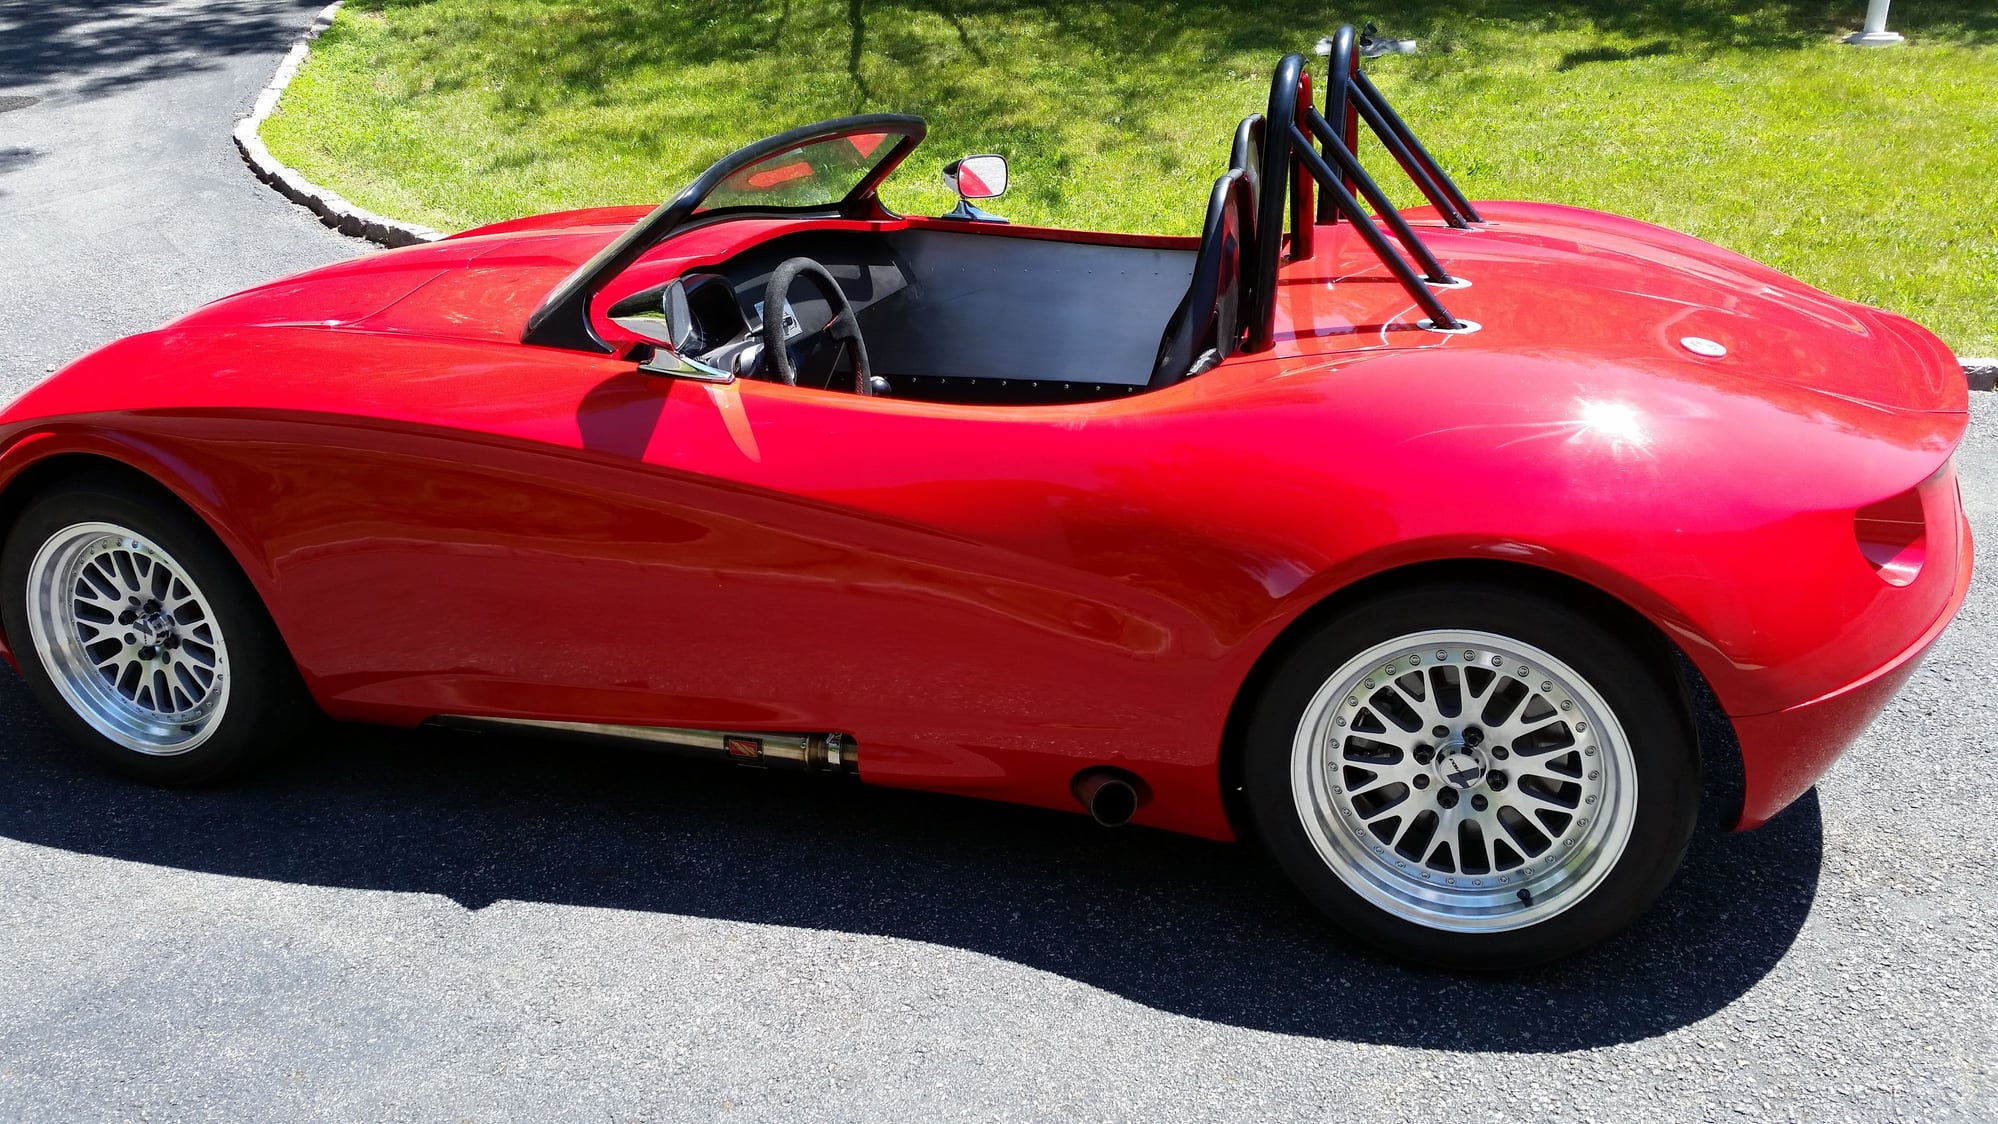 CATFISH GARAGE QUEEN $27,000.00 - Miata Turbo Forum - Boost cars